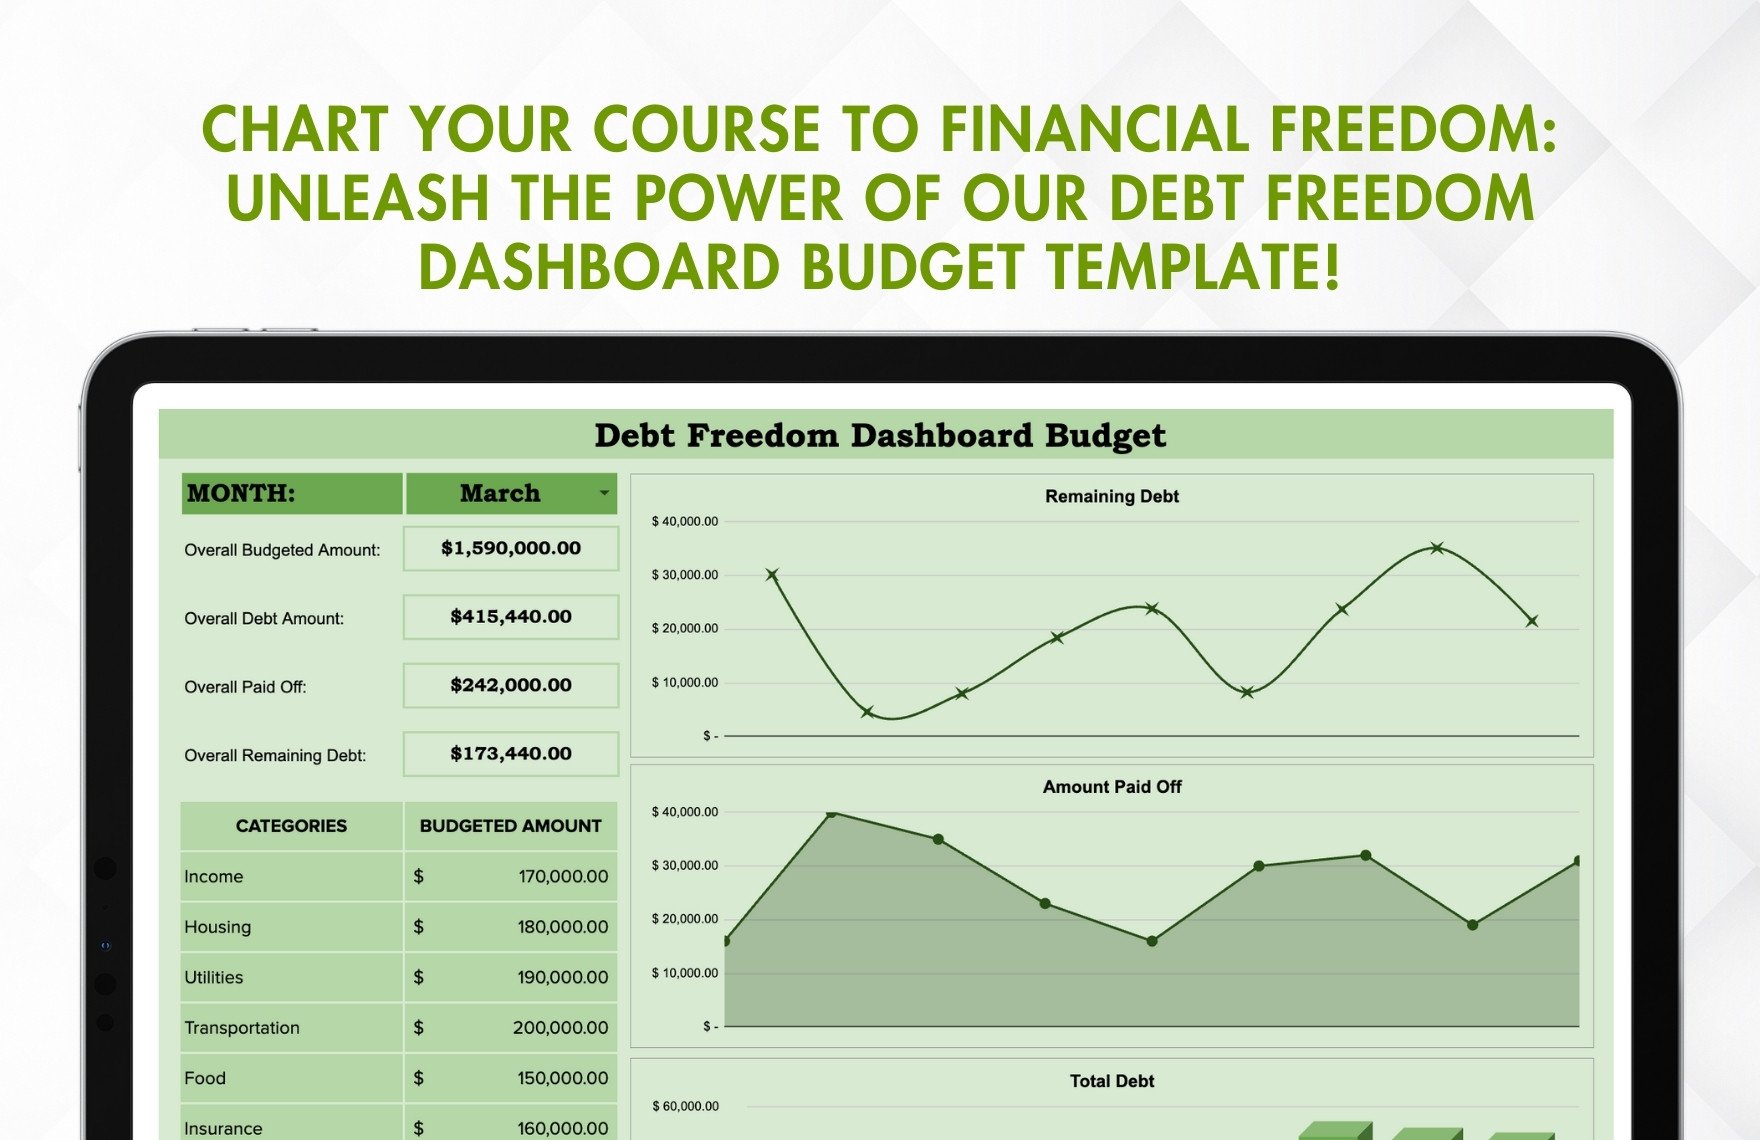 Debt Freedom Dashboard Budget Template